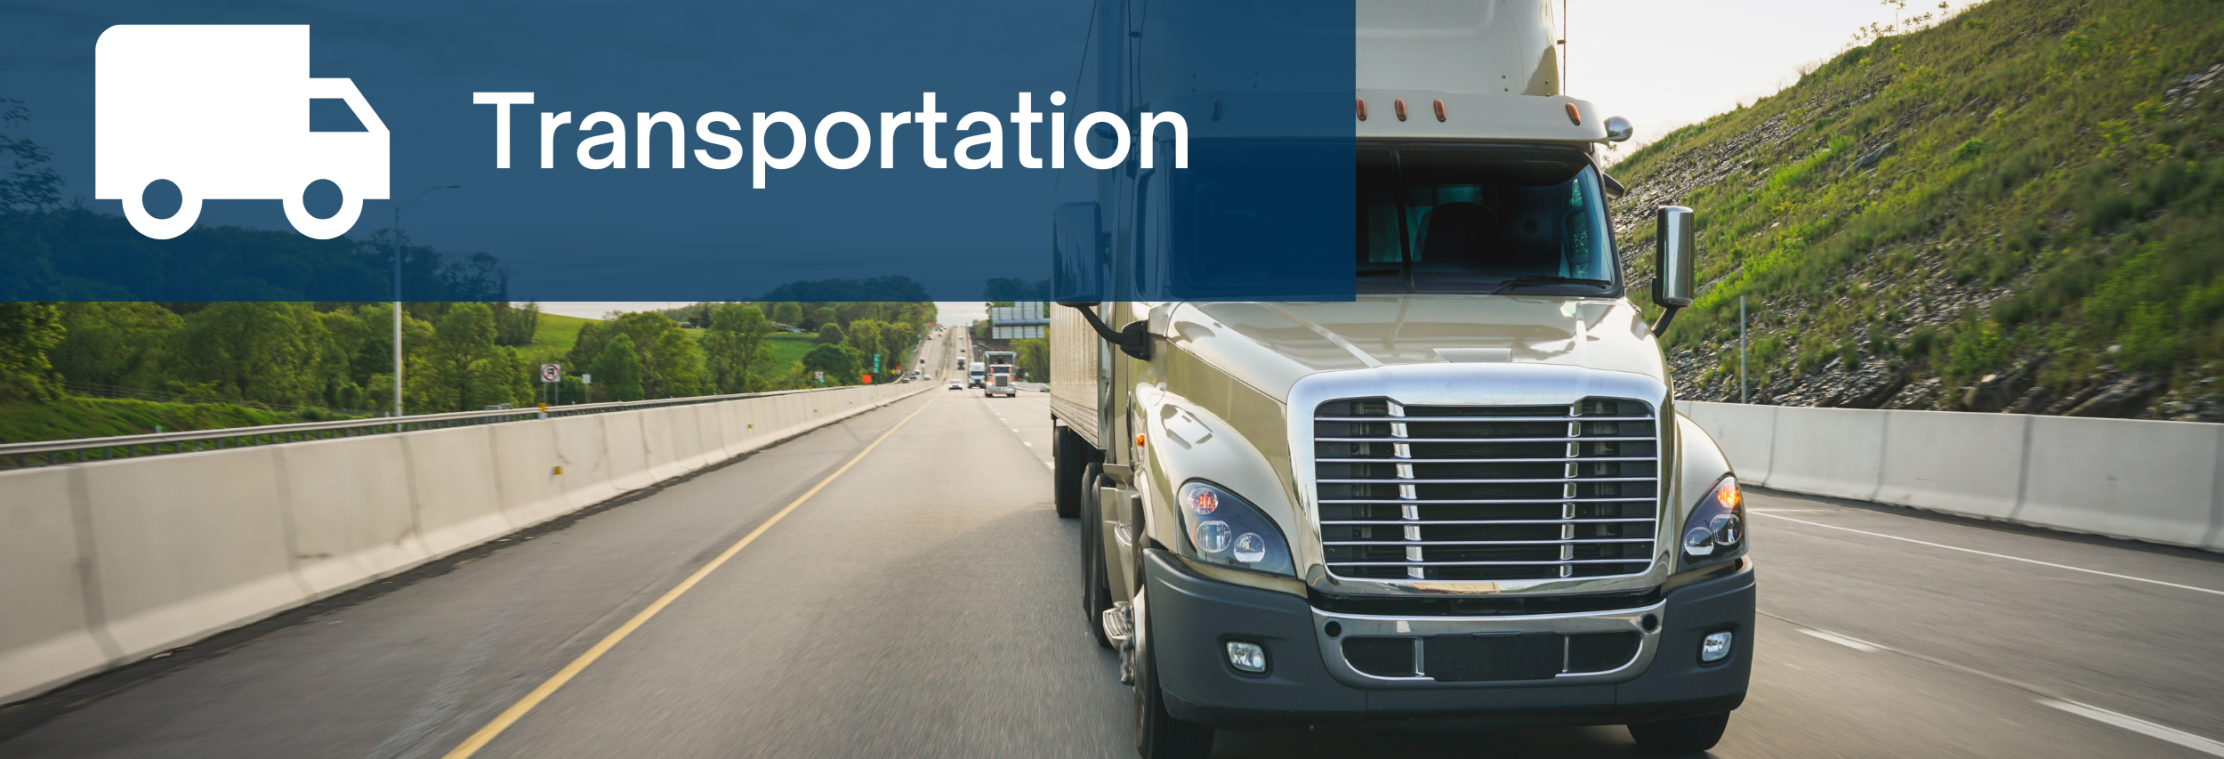 APSC Website Headers Transportation